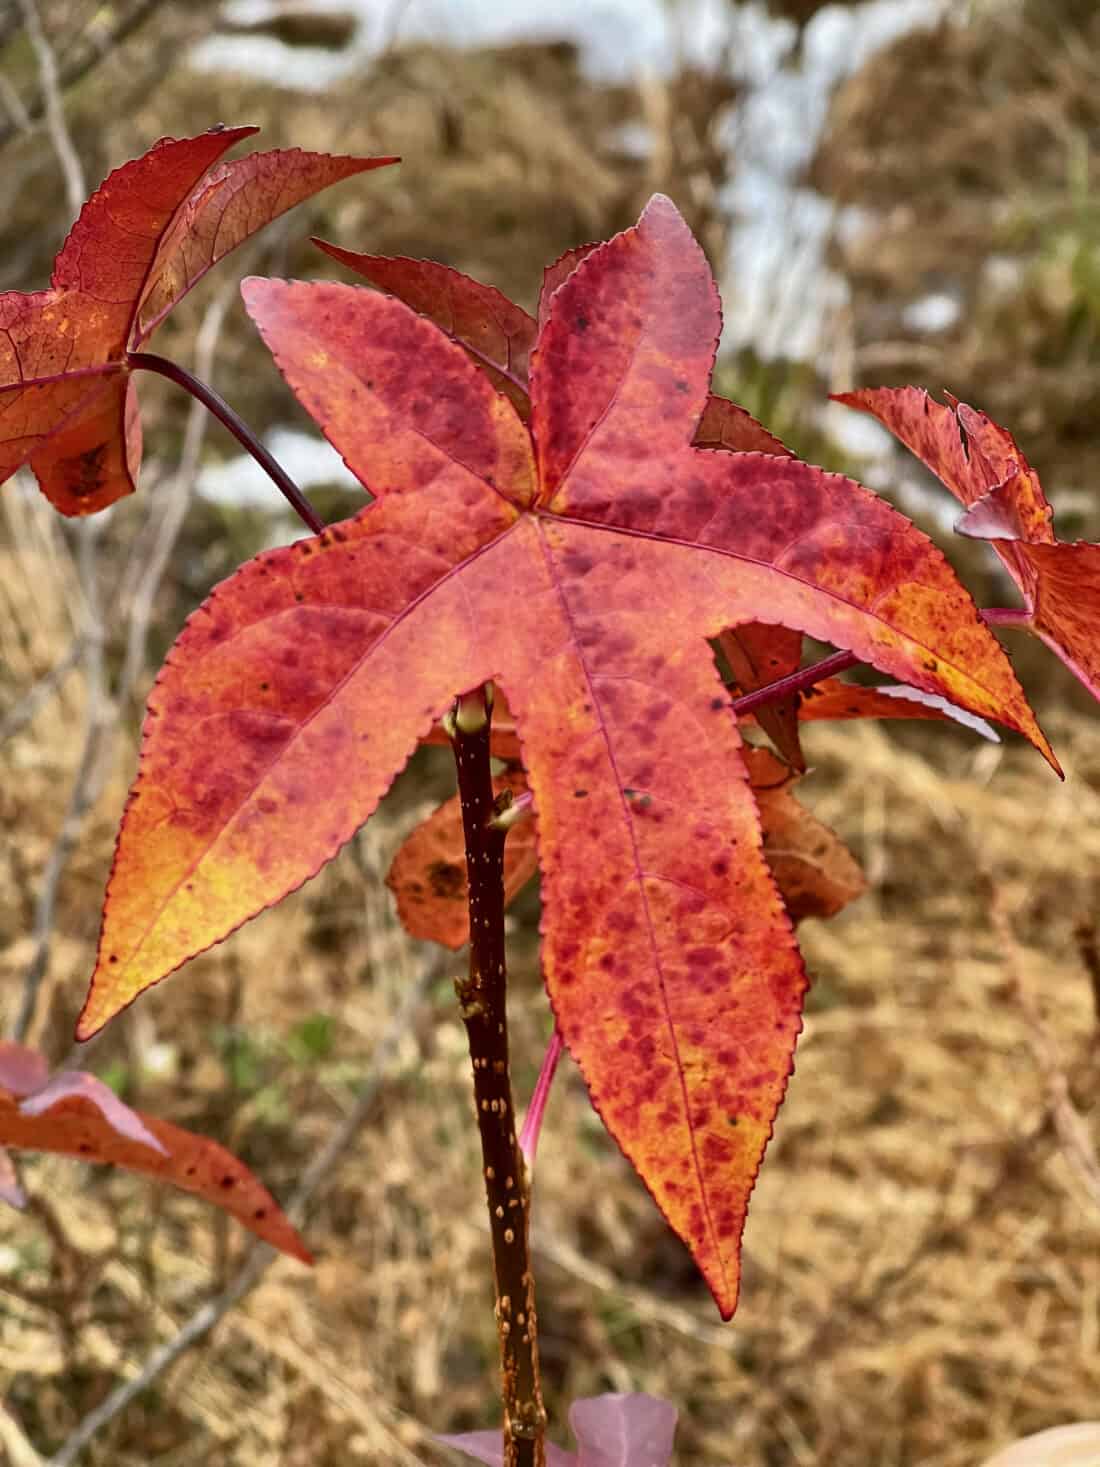 The distinctive star-shaped leaf of sweetgum tree